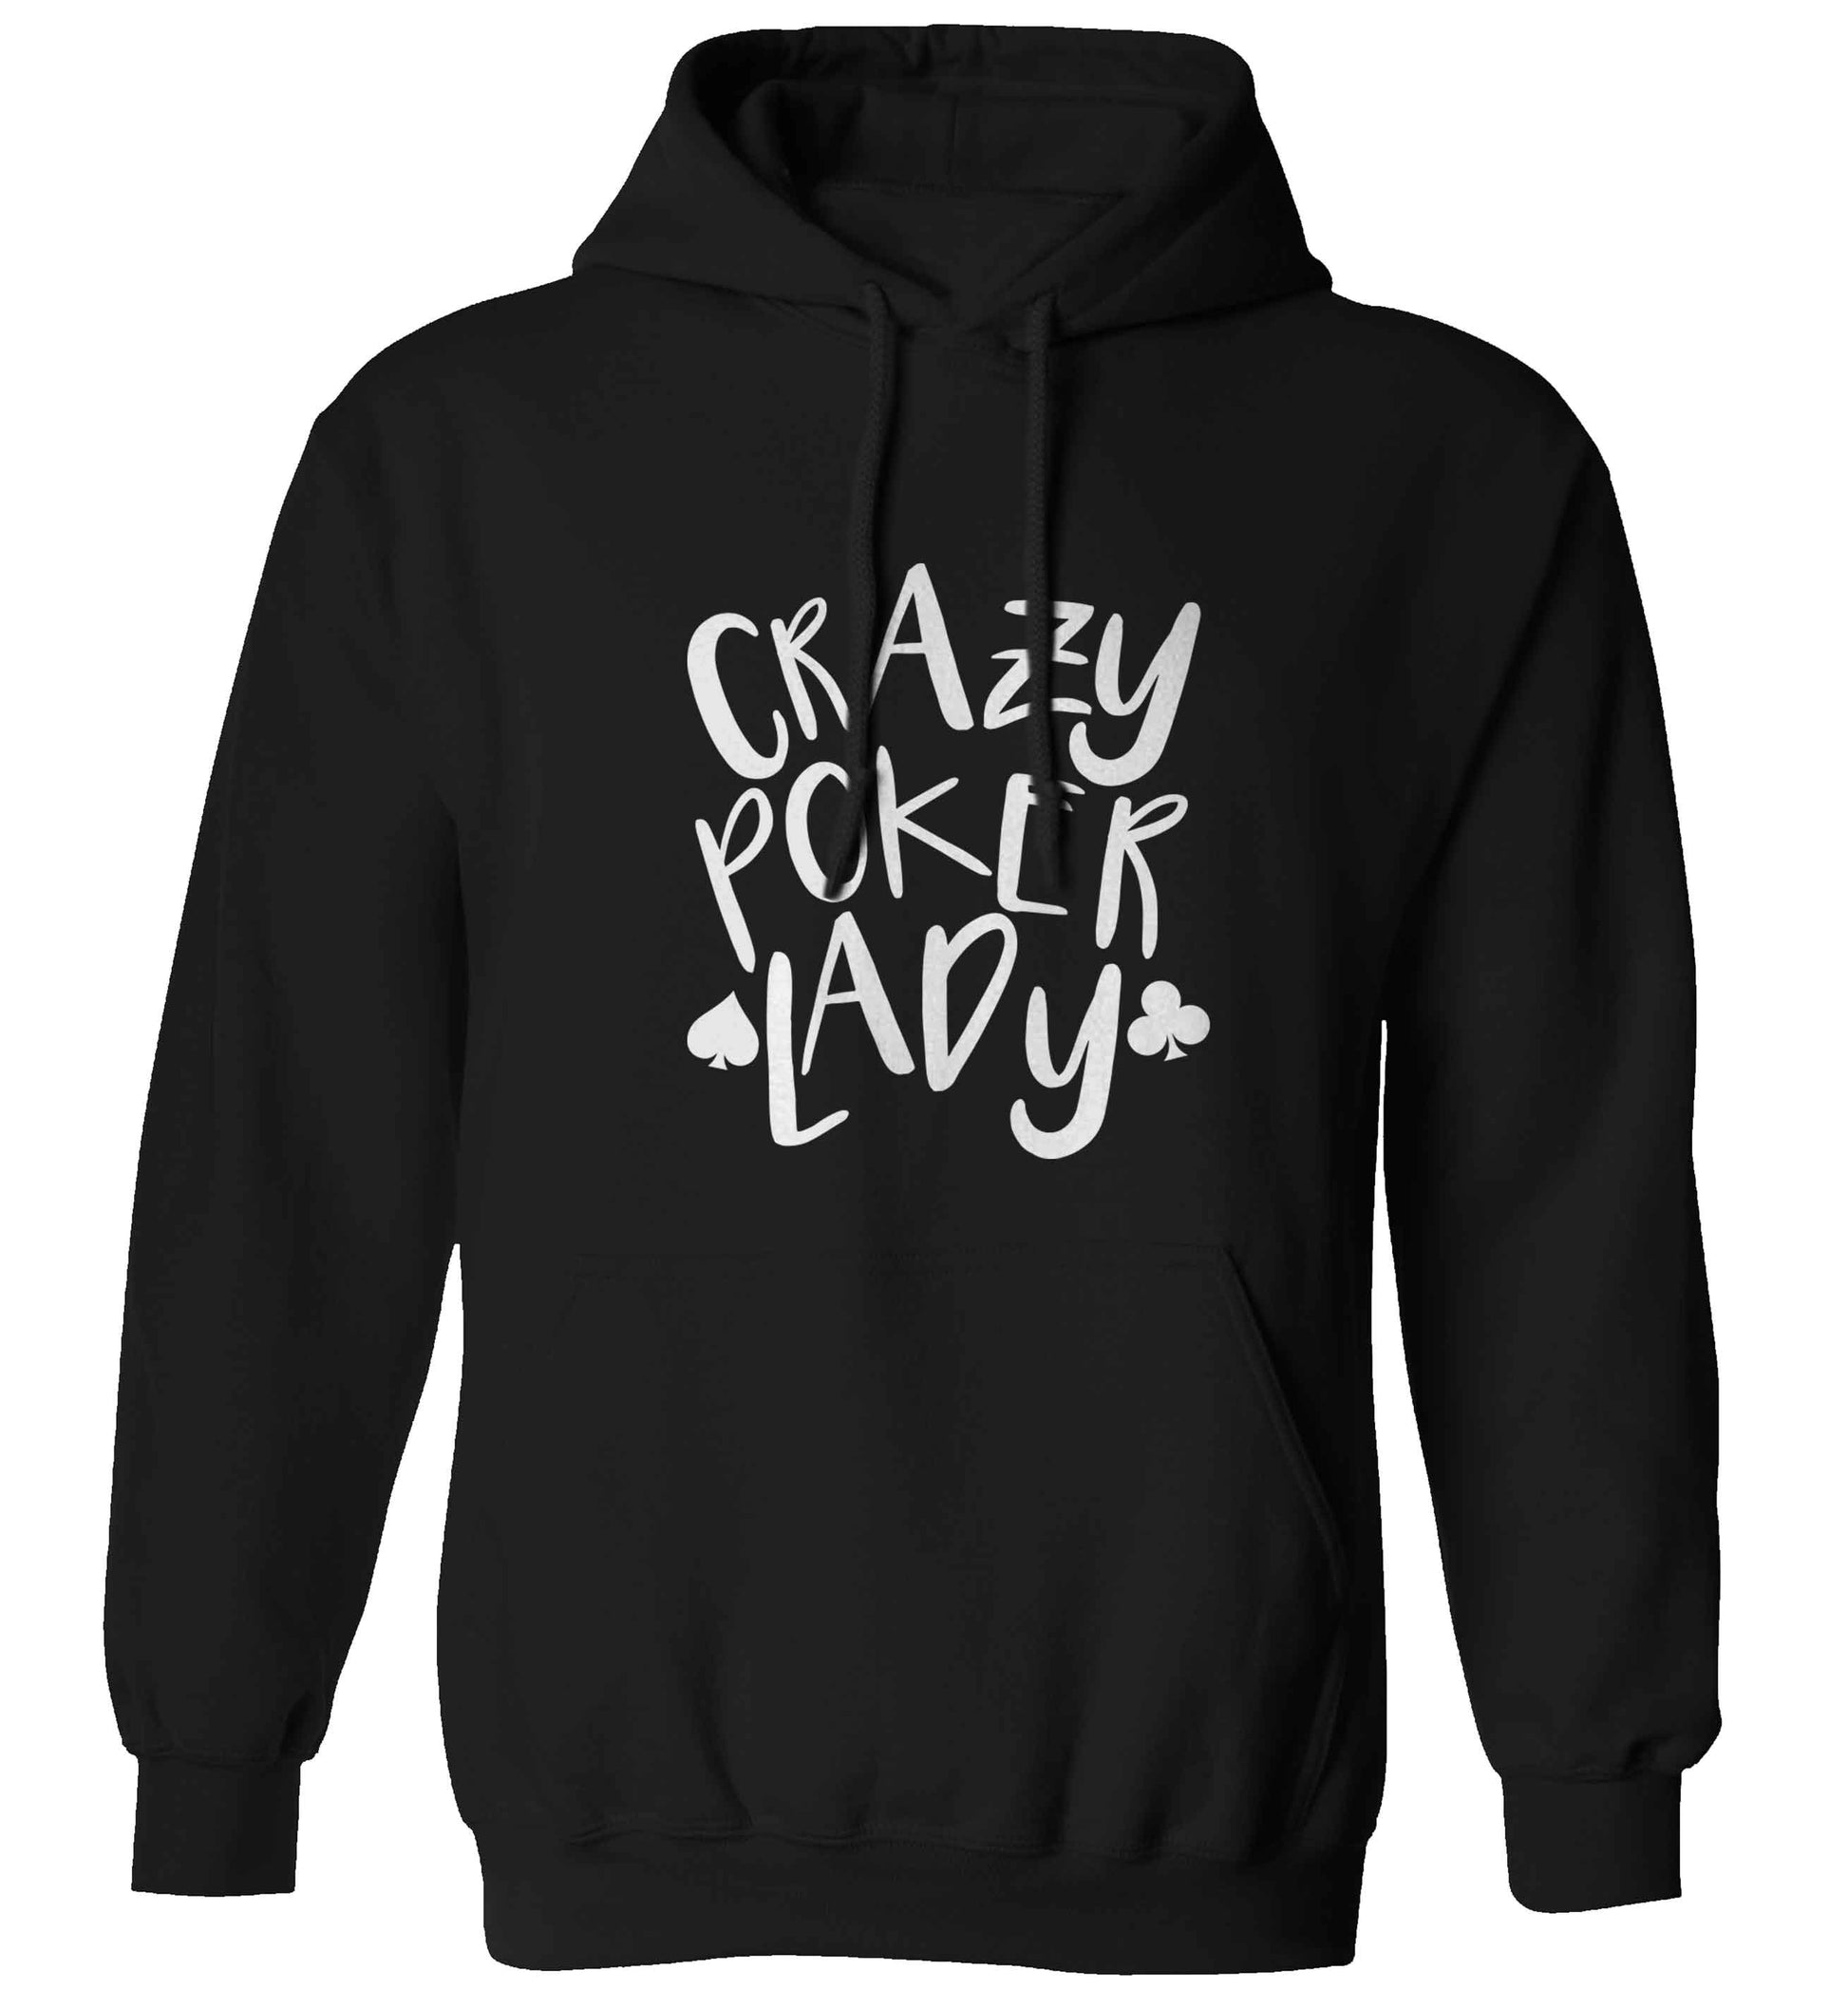 Crazy poker lady adults unisex black hoodie 2XL